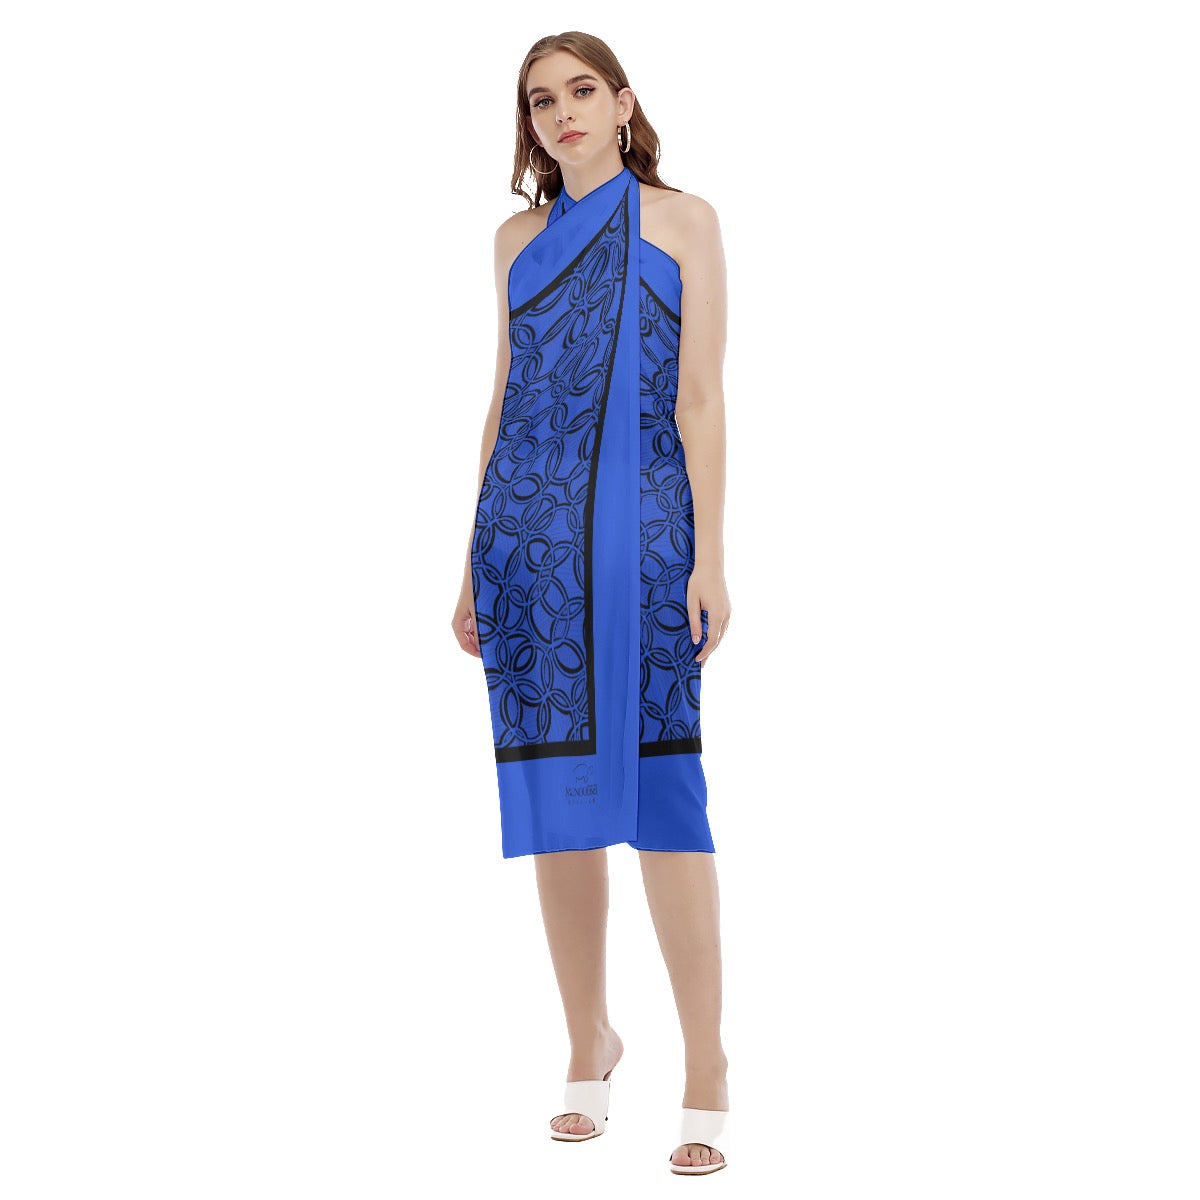 Geometric Blue & Black Women's Beach Dress. Pattern hand-painted by the Designer Maria Alejandra Echenique